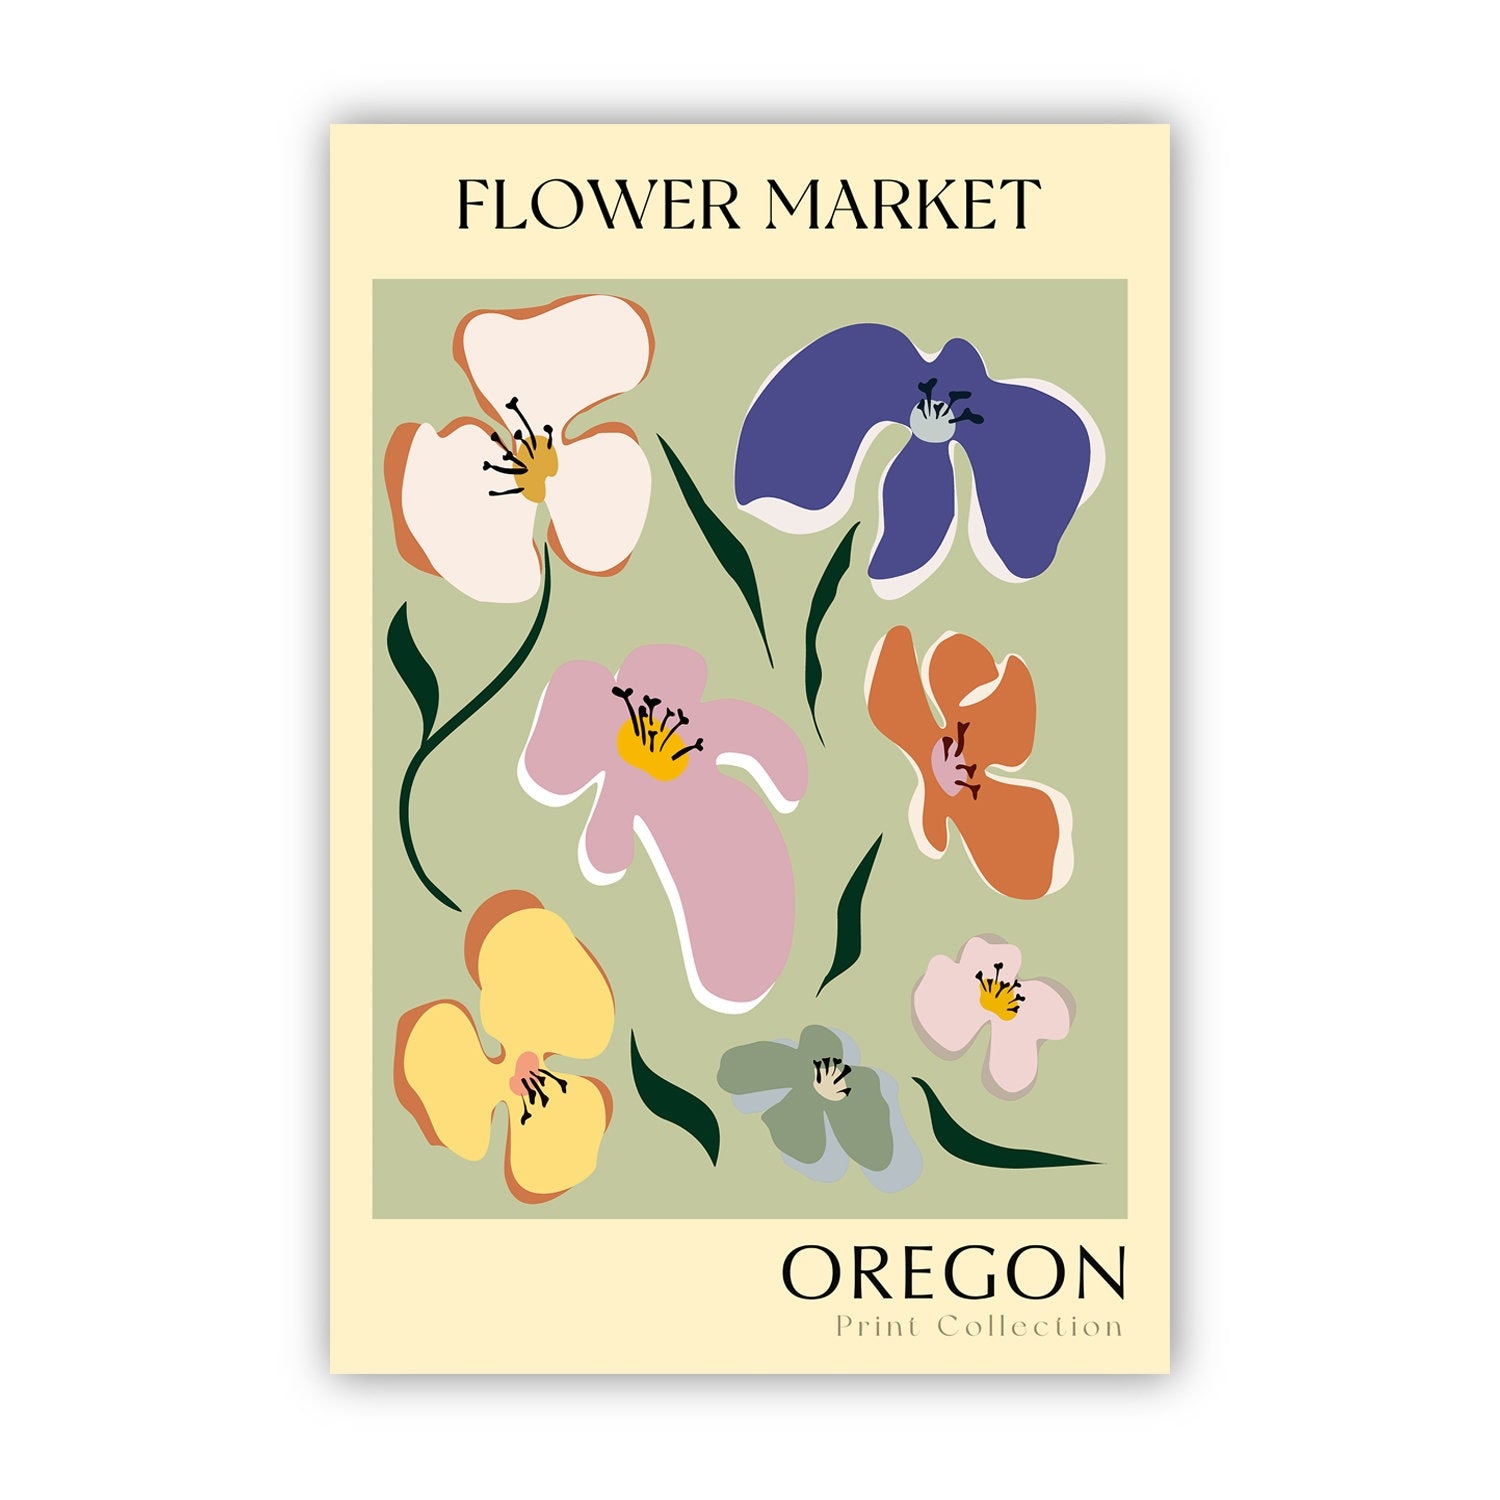 Oregon State flower print, USA states poster, Oregon flower market poster, Botanical posters, Nature poster artwork, Boho floral wall art